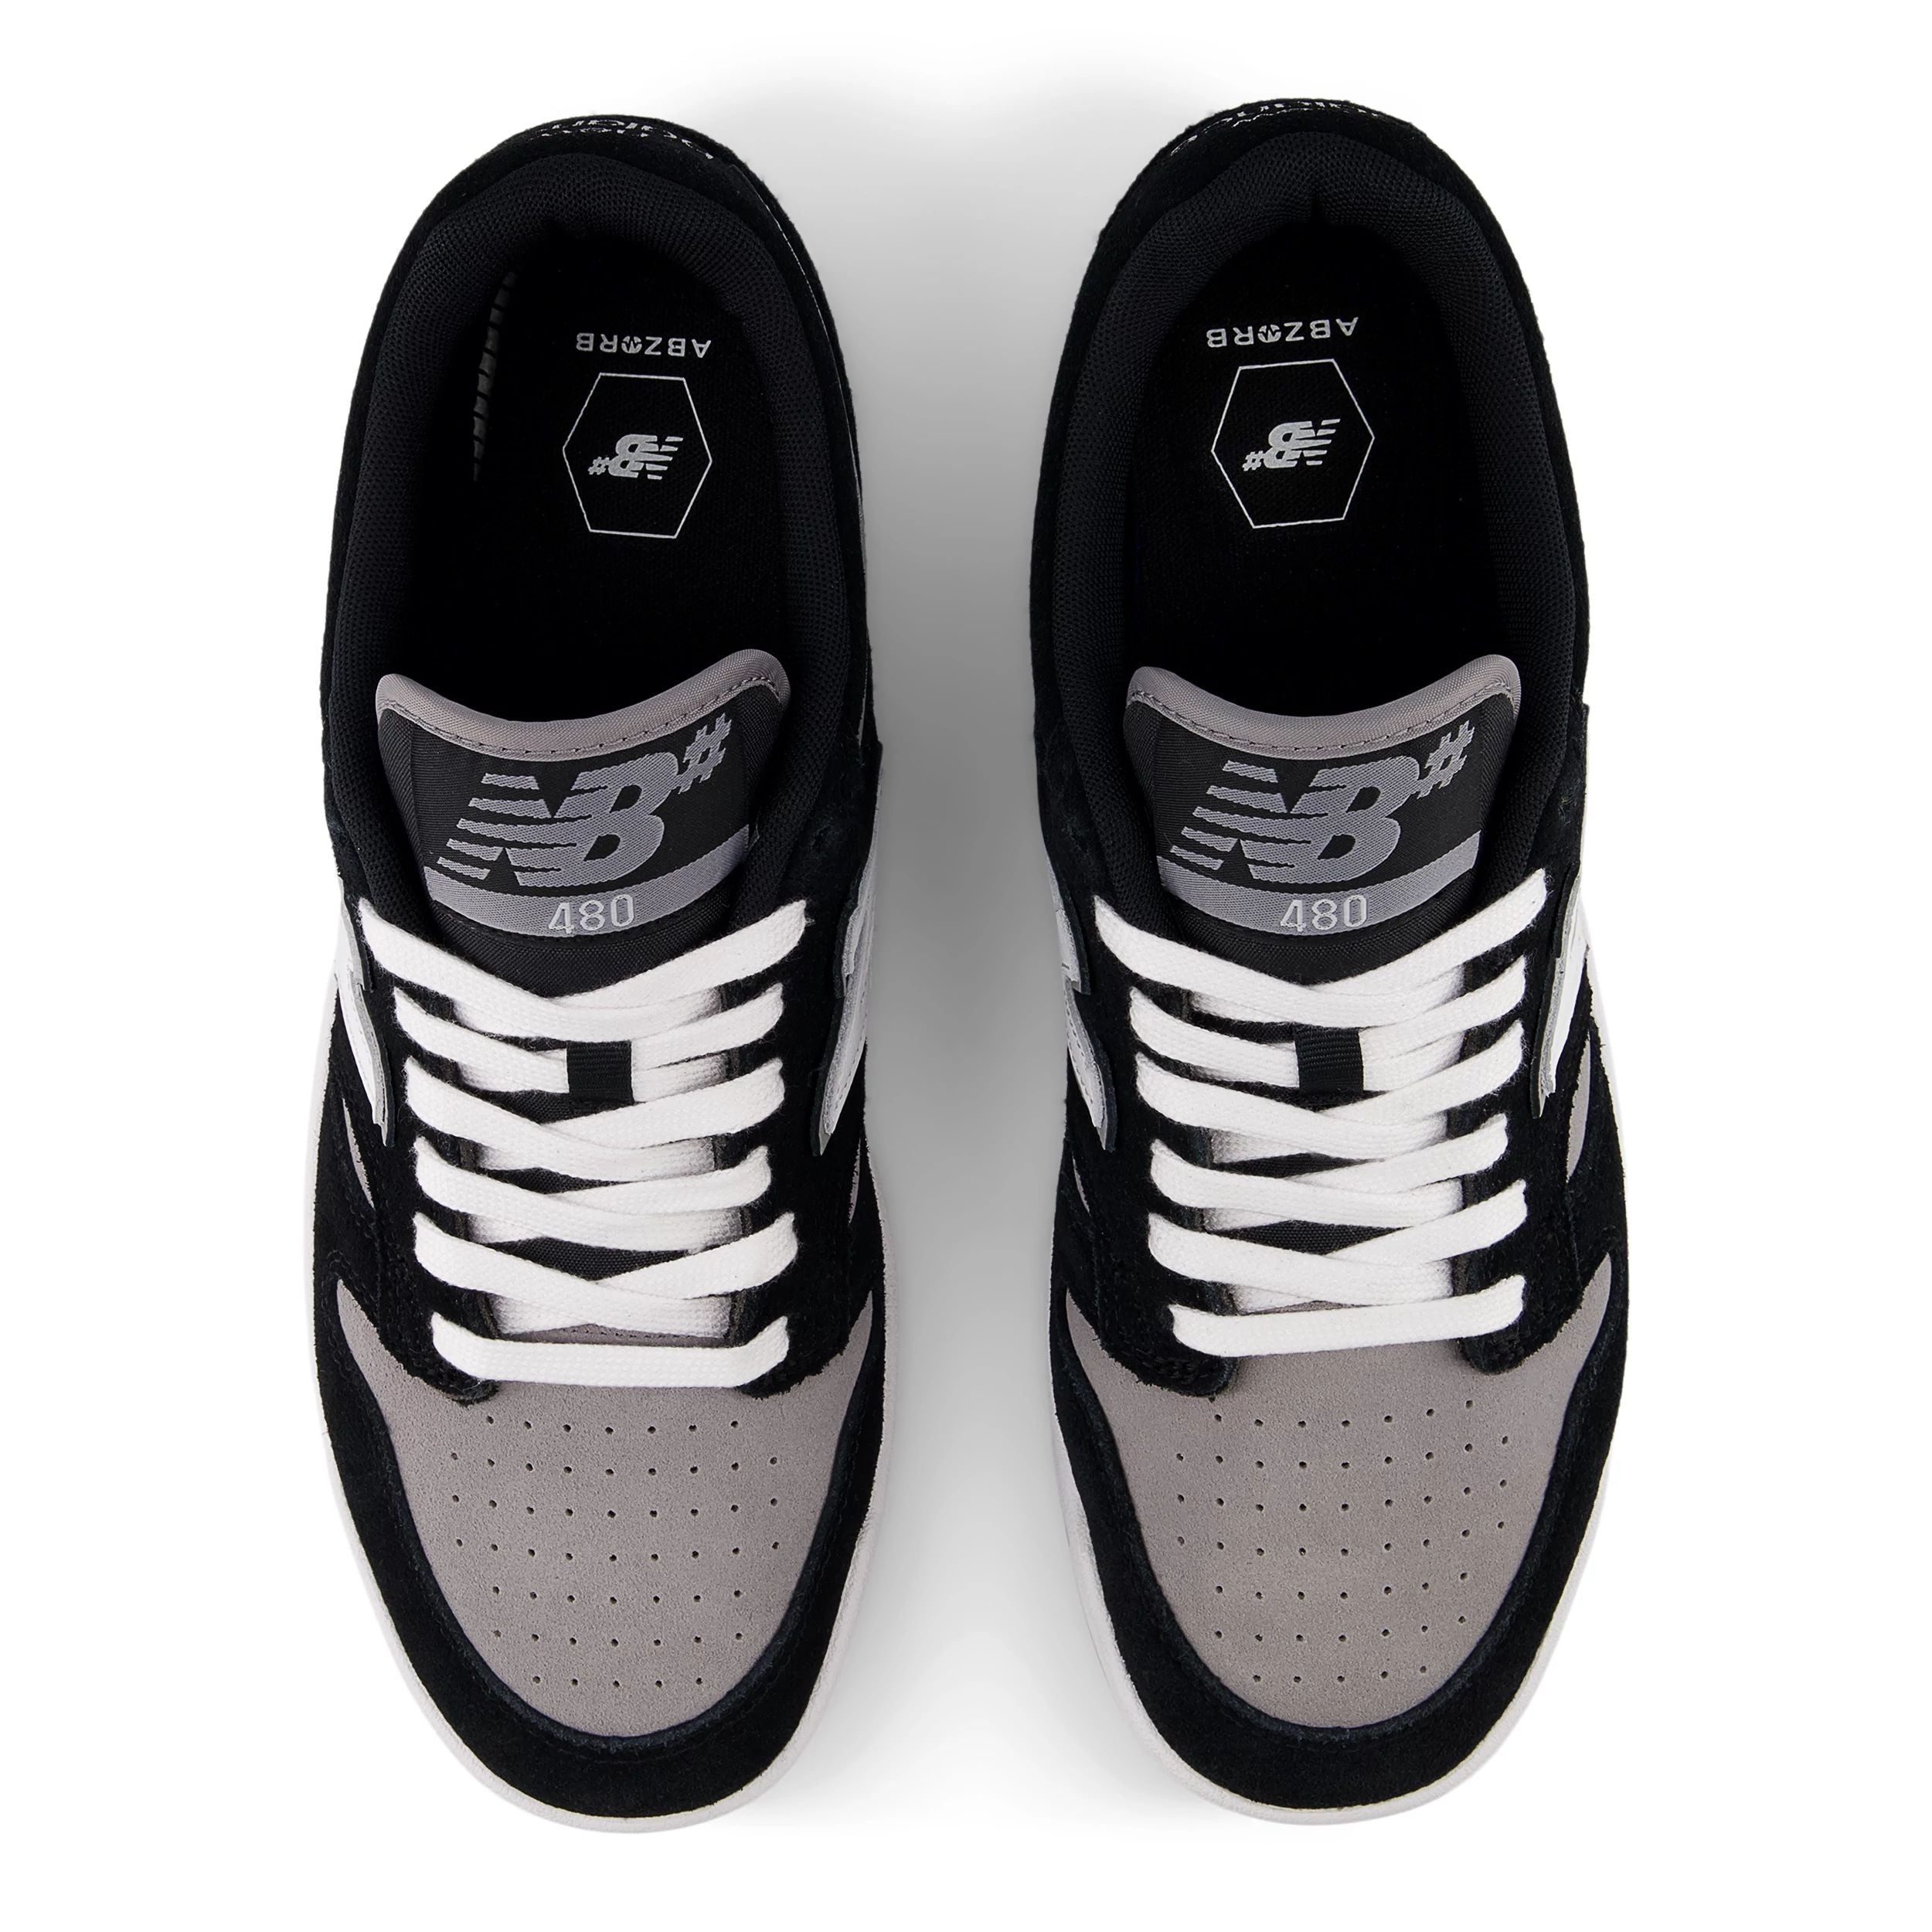 Black/Grey 480 NB Numeric Skateboard Shoe Top